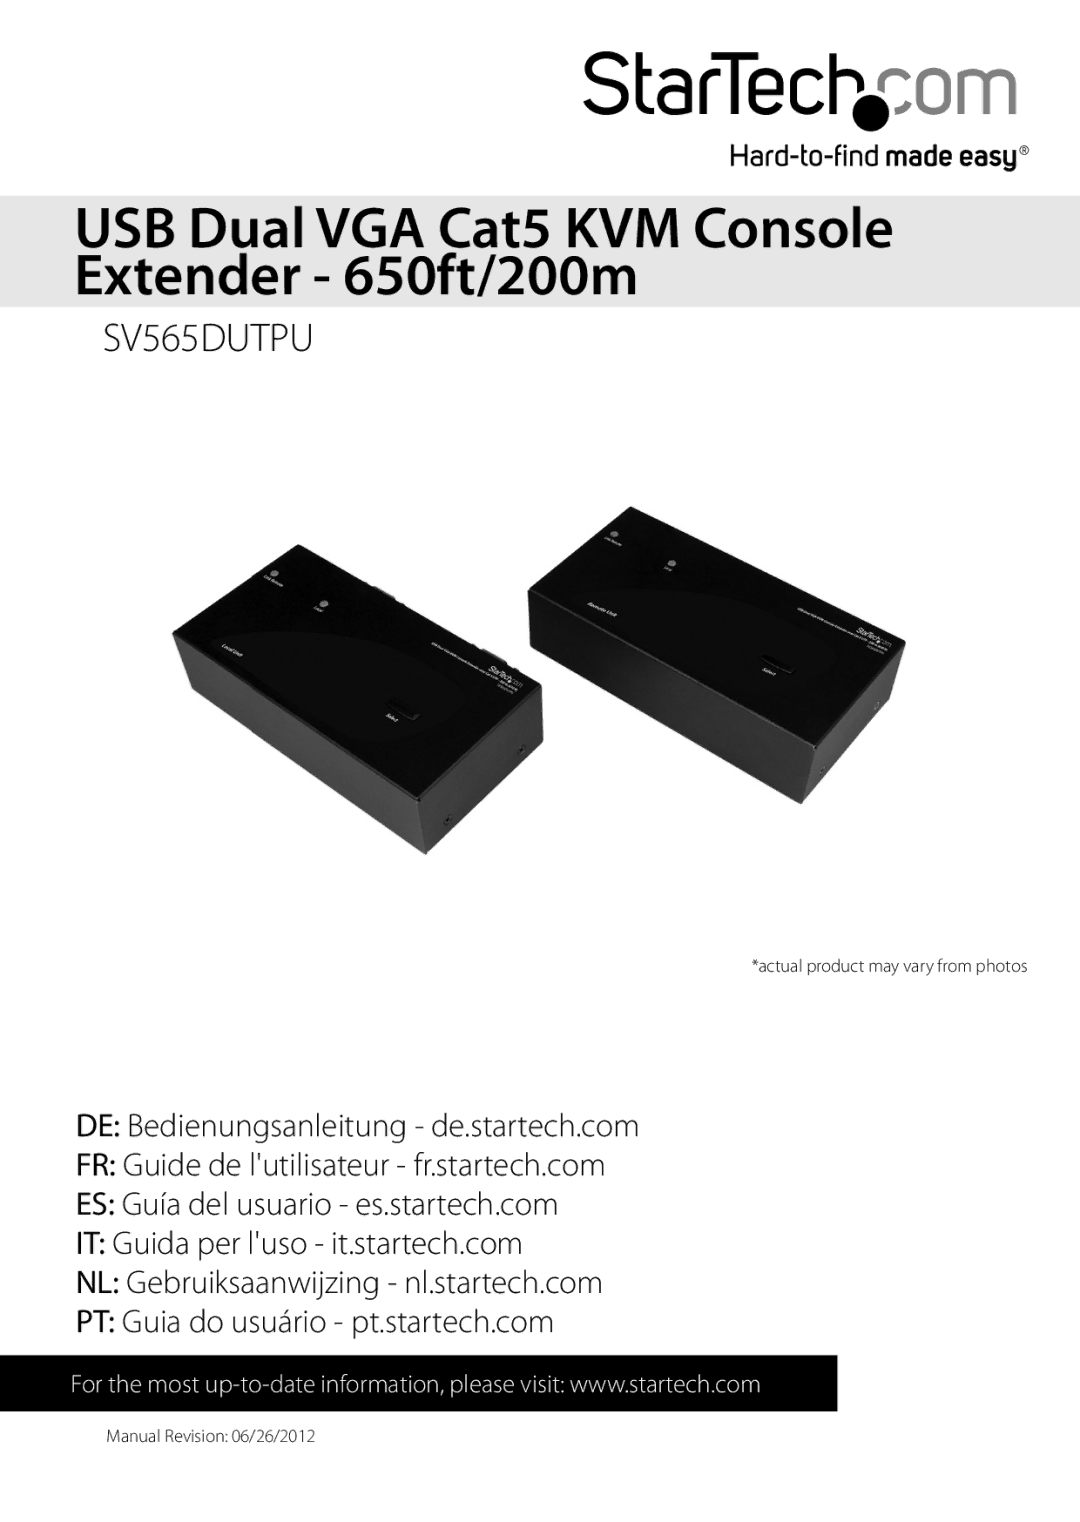 StarTech.com usb dual vga cat5 kvm console extender - 650ft/200m manual USB Dual VGA Cat5 KVM Console Extender 650ft/200m 